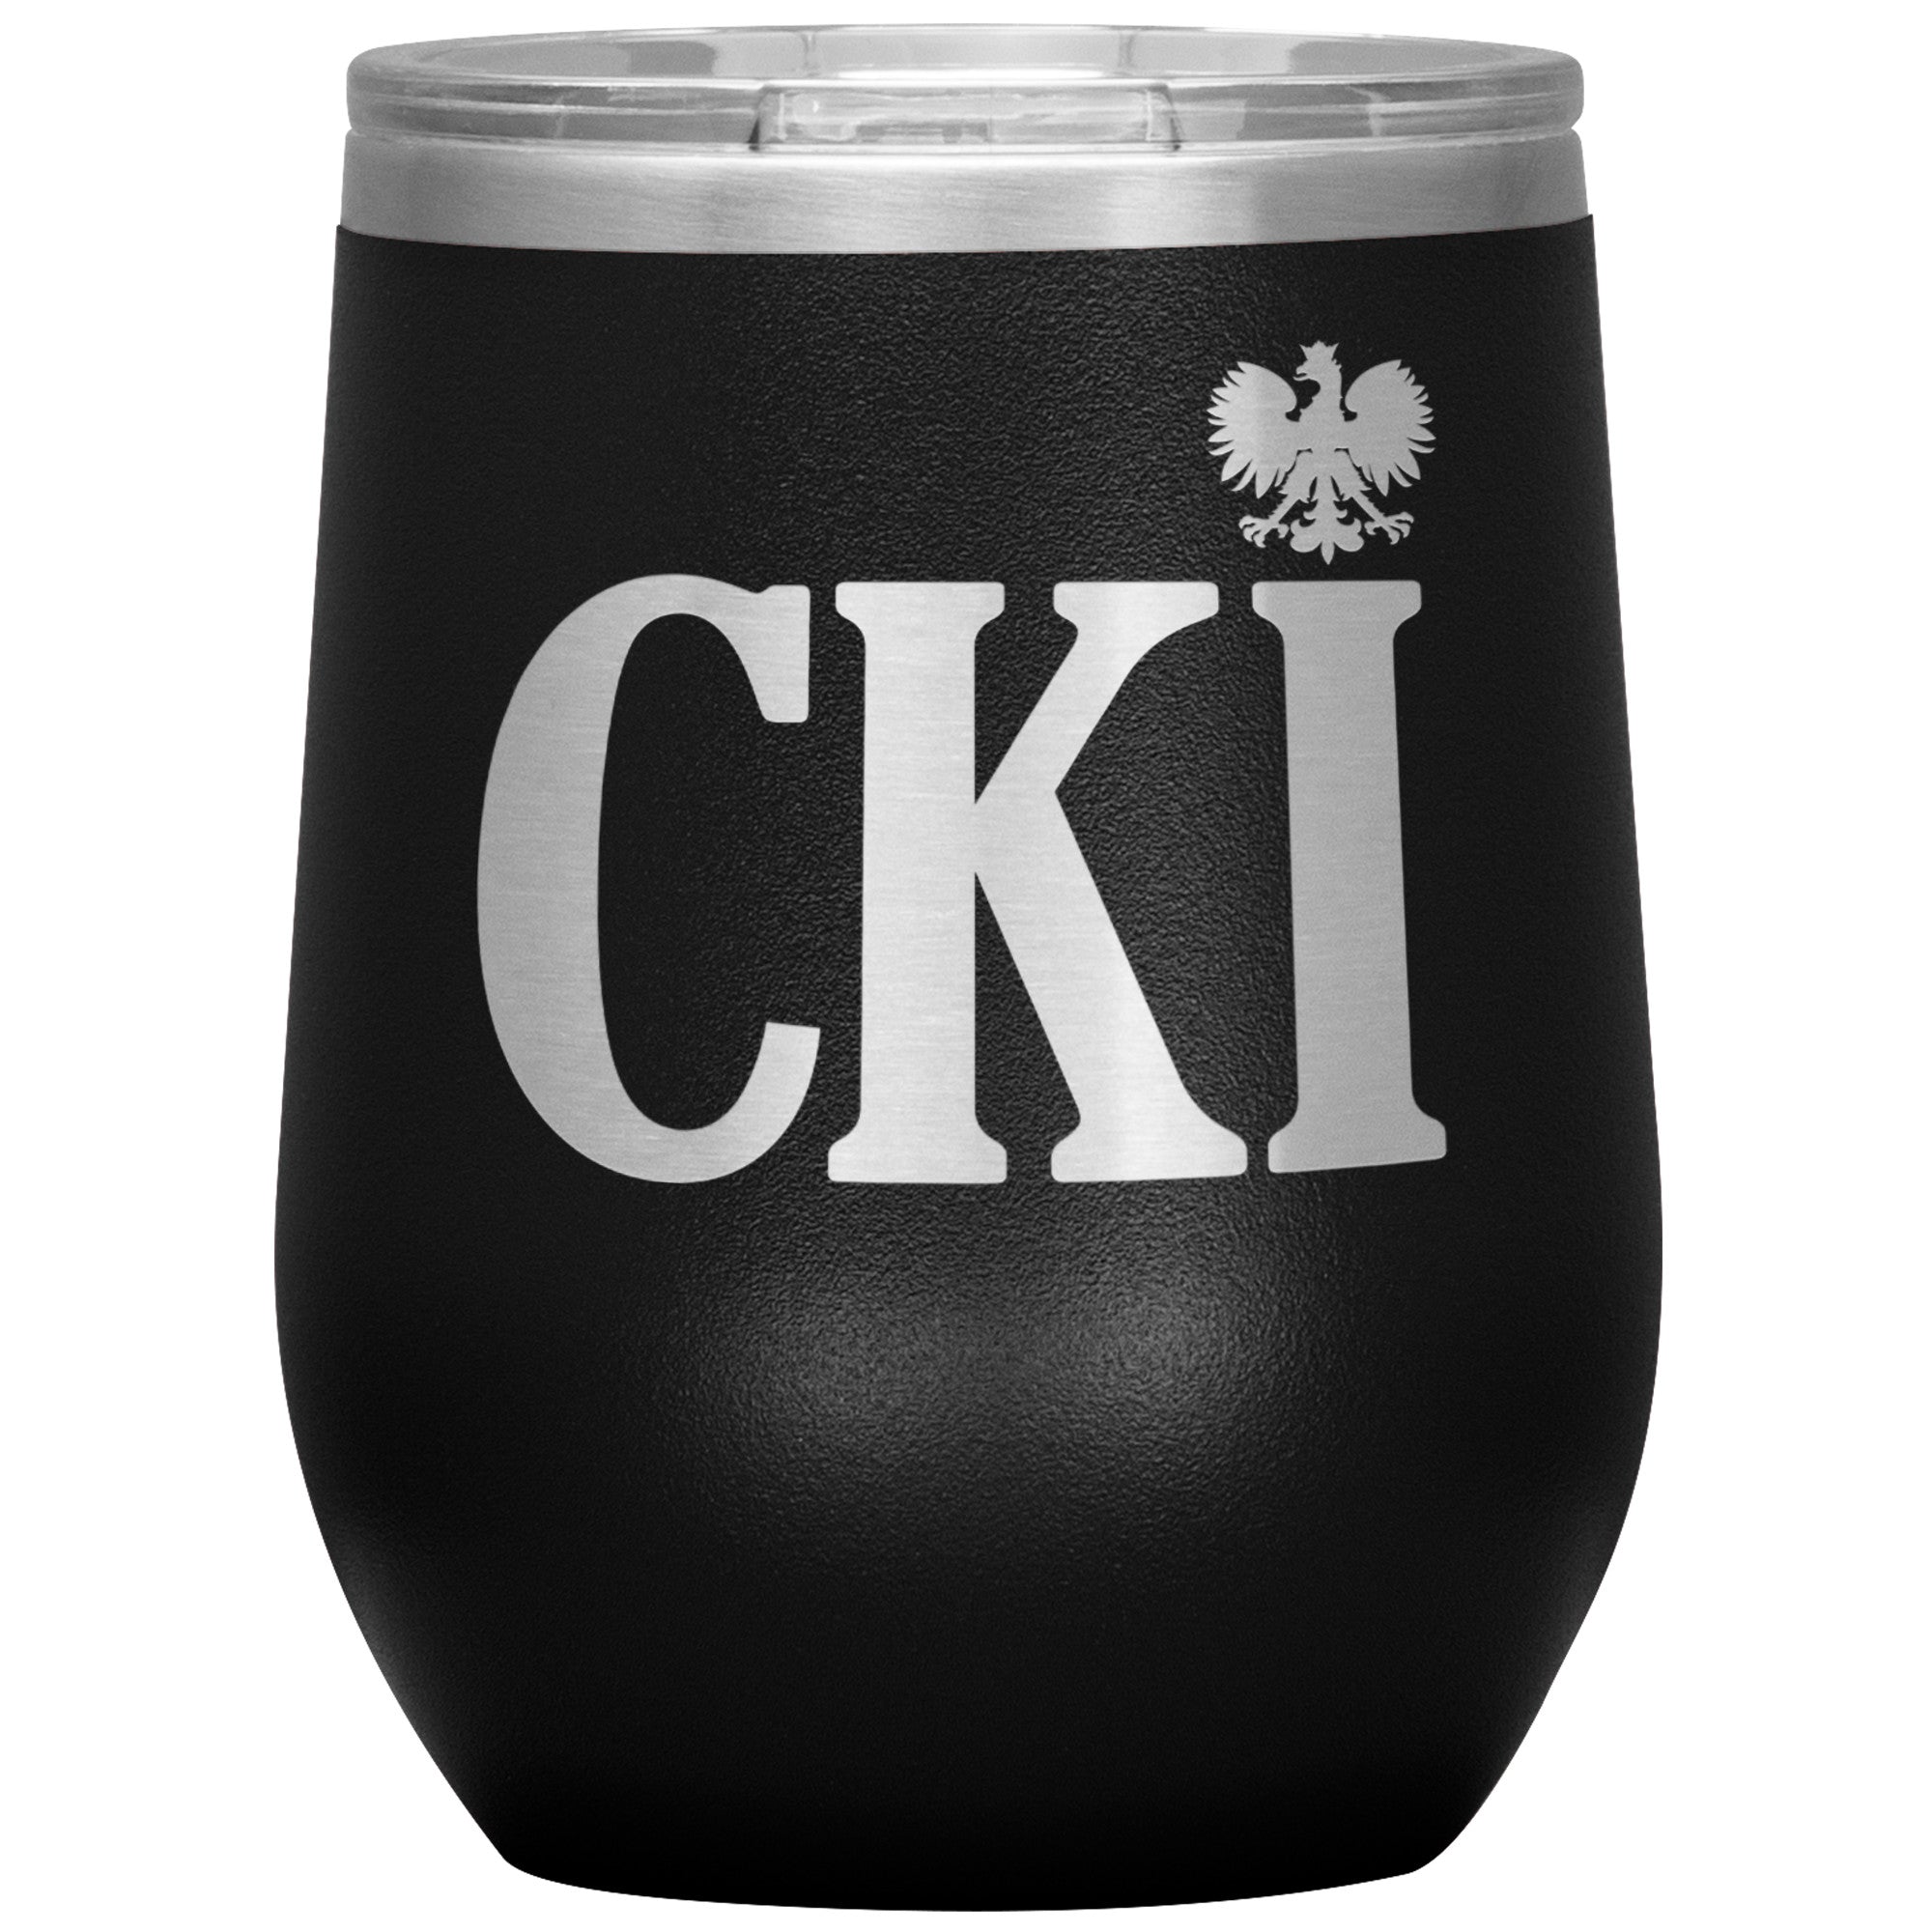 Polish Surname Ending in CKI Insulated Wine Tumbler Tumblers teelaunch Black  